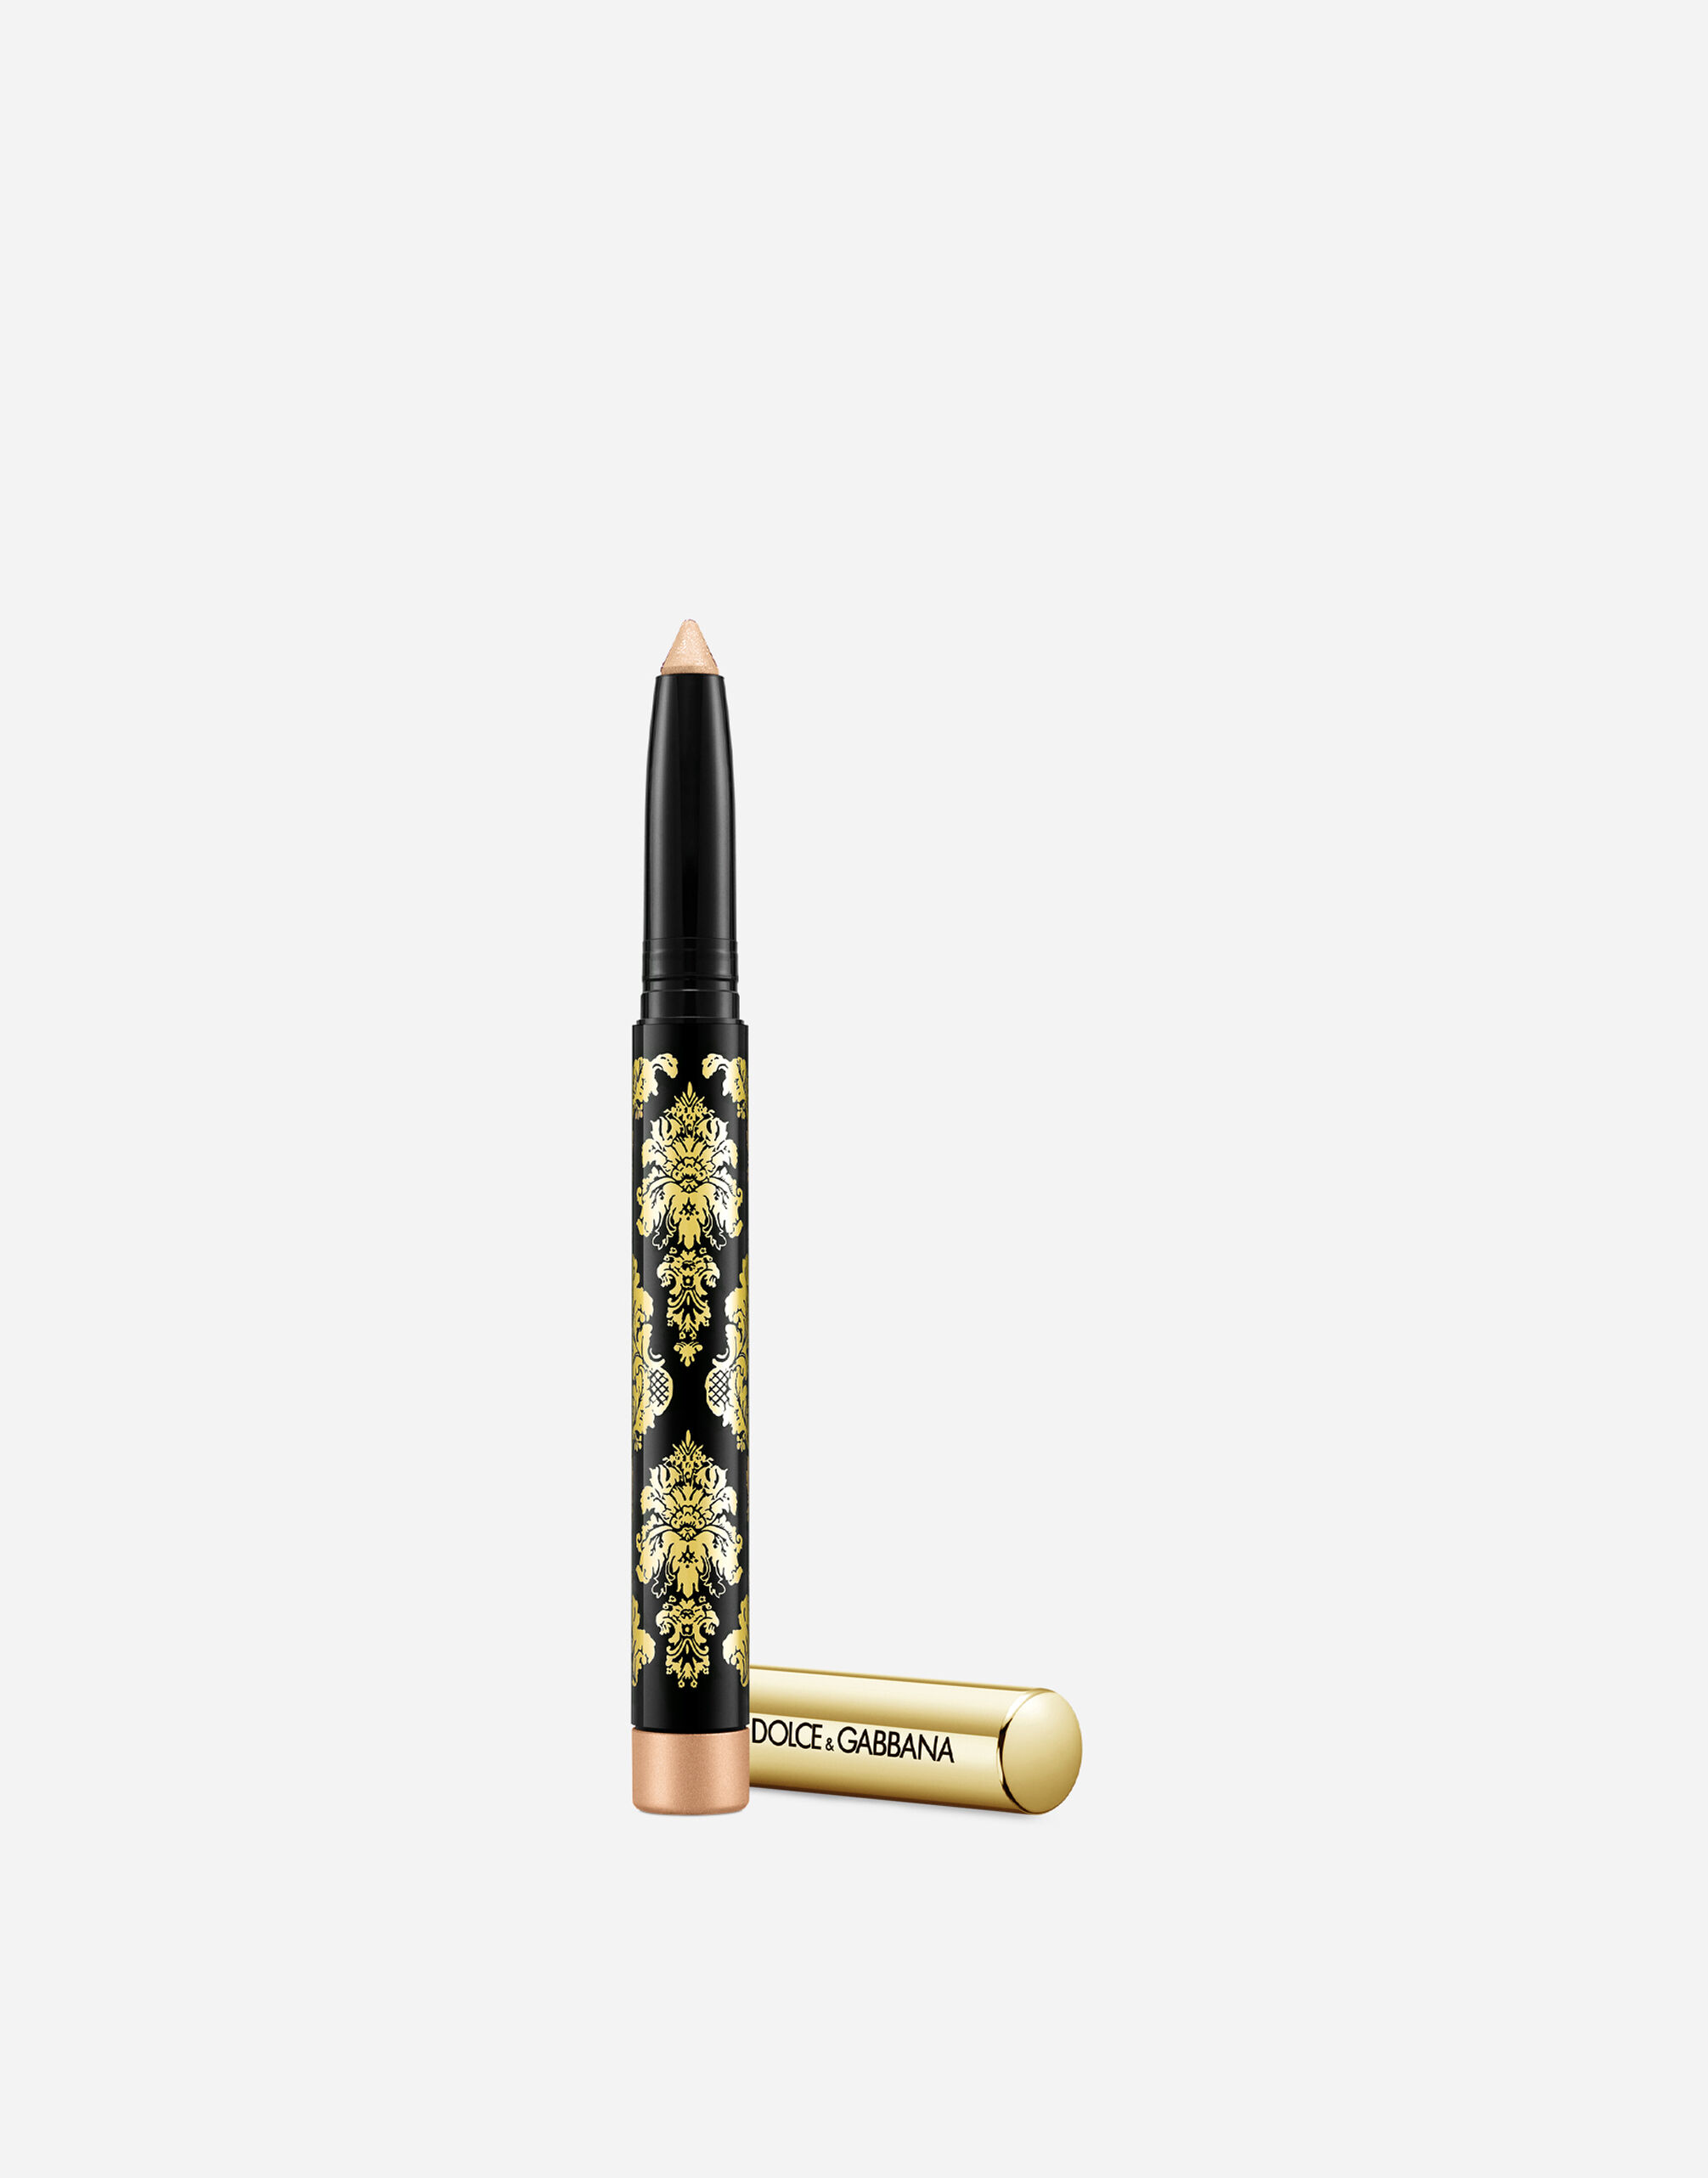 Тени-карандаш для глаз Dolce & Gabbana Intenseyes кремовые, №7 Shimmer, 1,4 г тени для глаз кремовые influence beauty alien тон 01 5 г